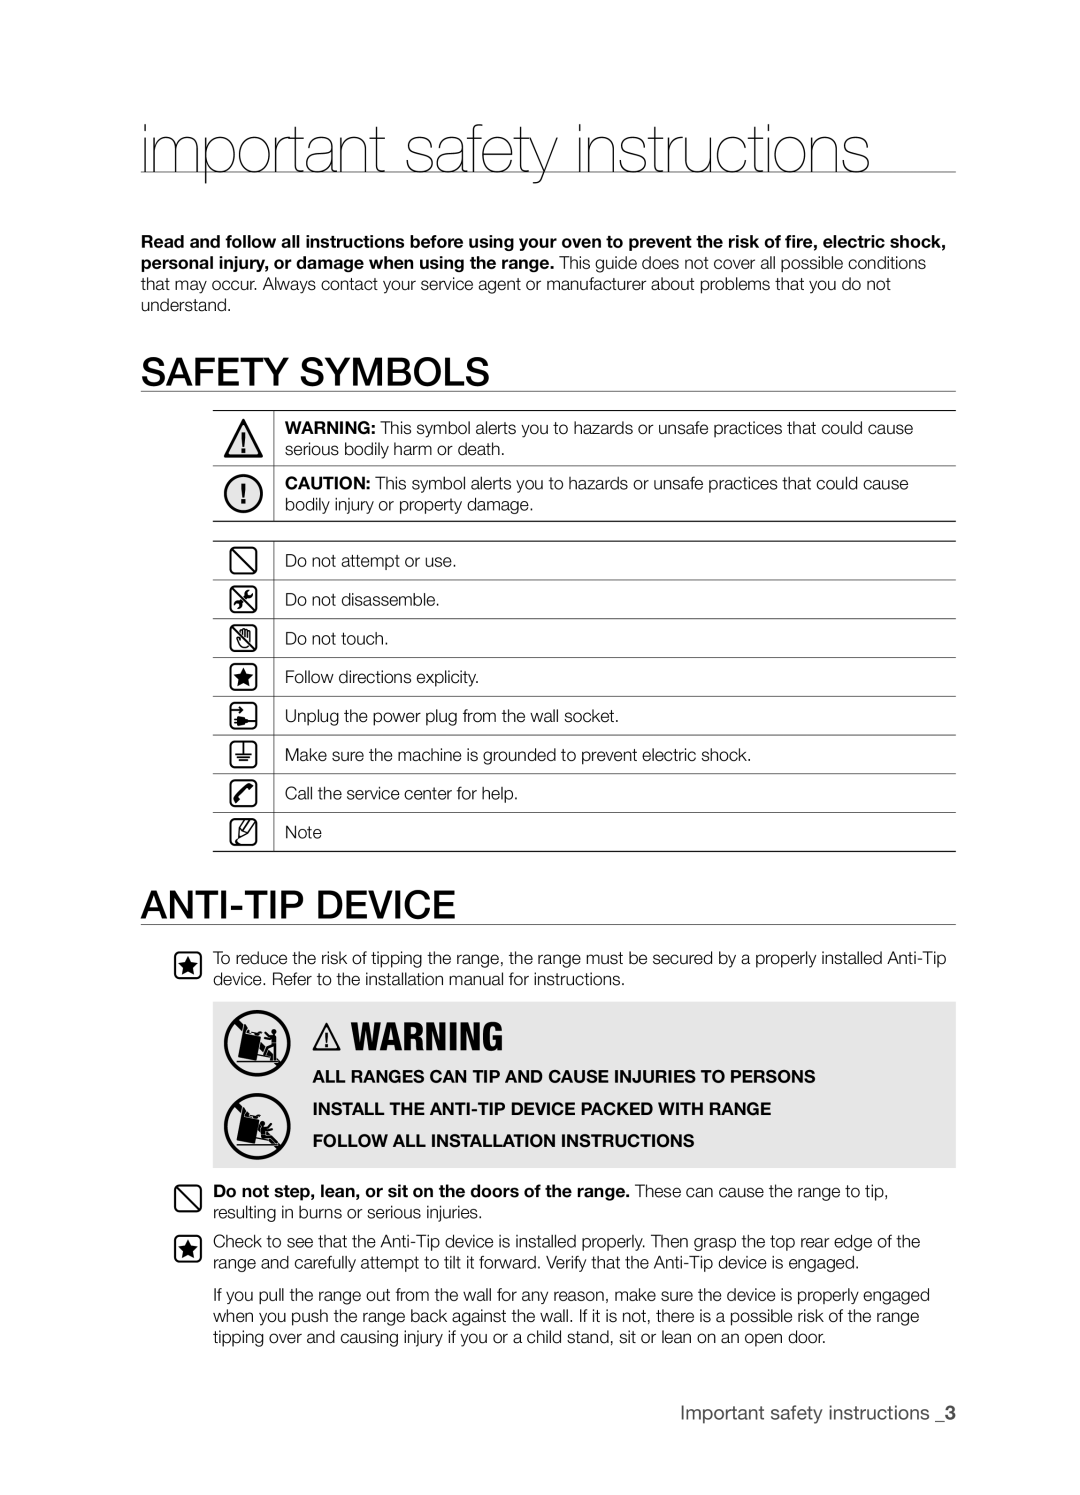 Samsung FTQ352IWX important safety instructions, Safety Symbols, Anti-Tipdevice, Important safety instructions _ 